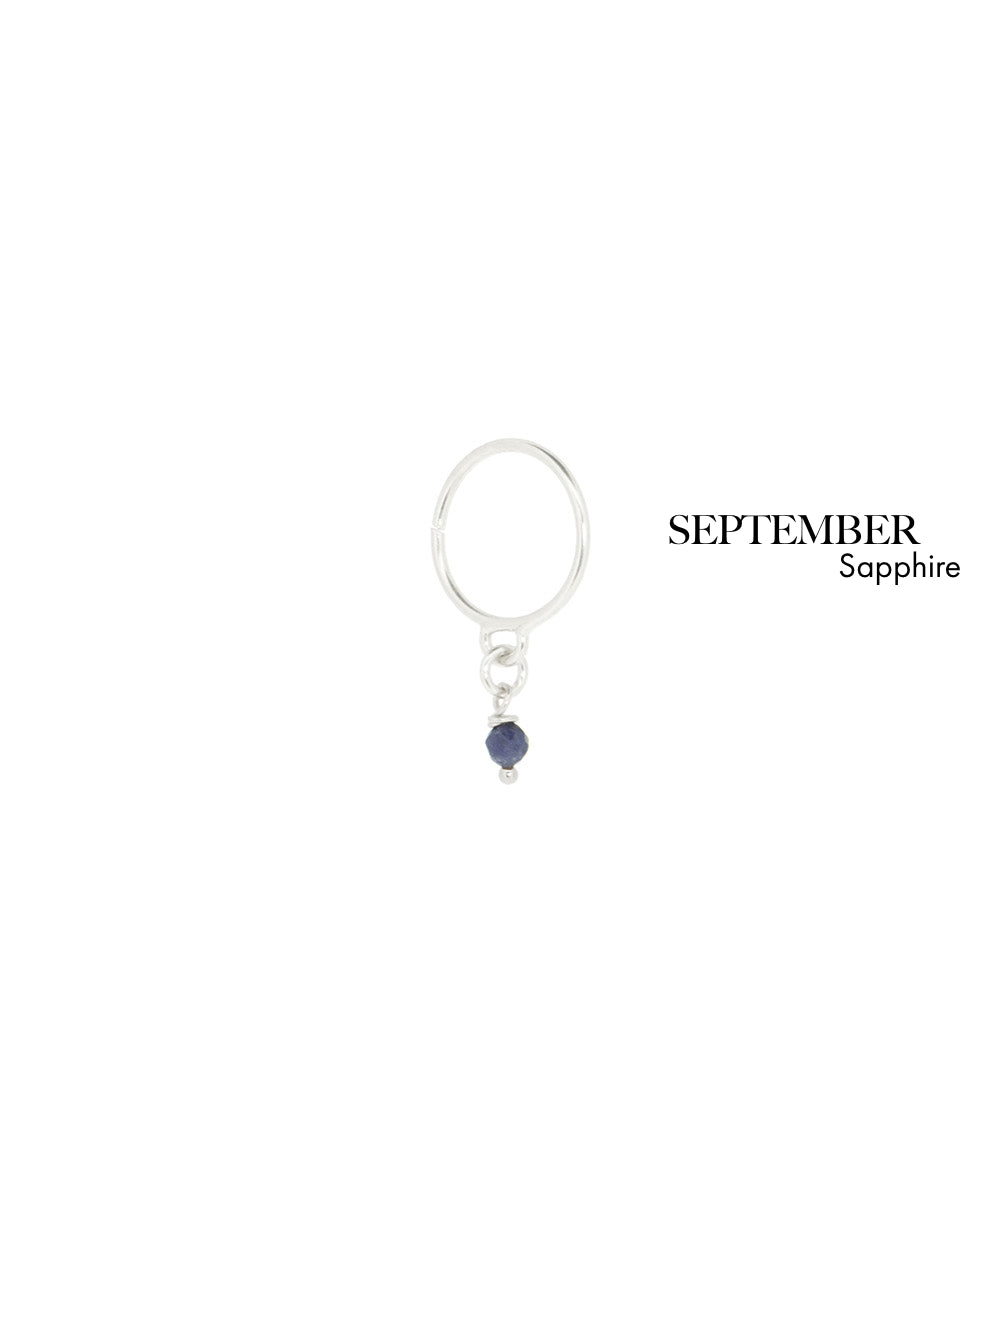 Bestie Birthstone September - Sapphire | 925 Sterling Silver